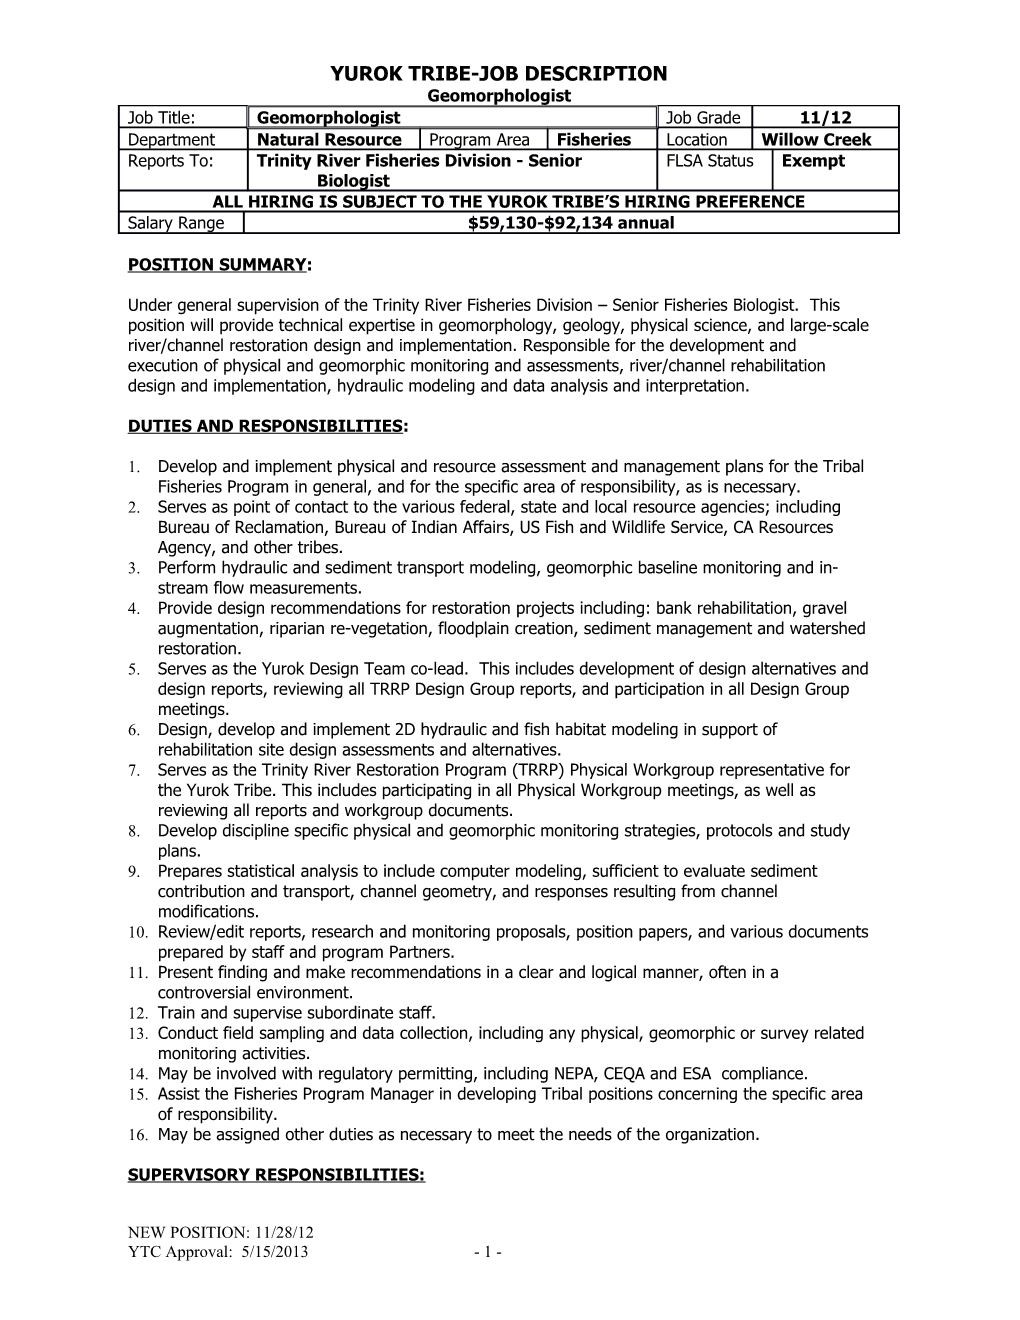 Yurok Tribe-Job Description s1